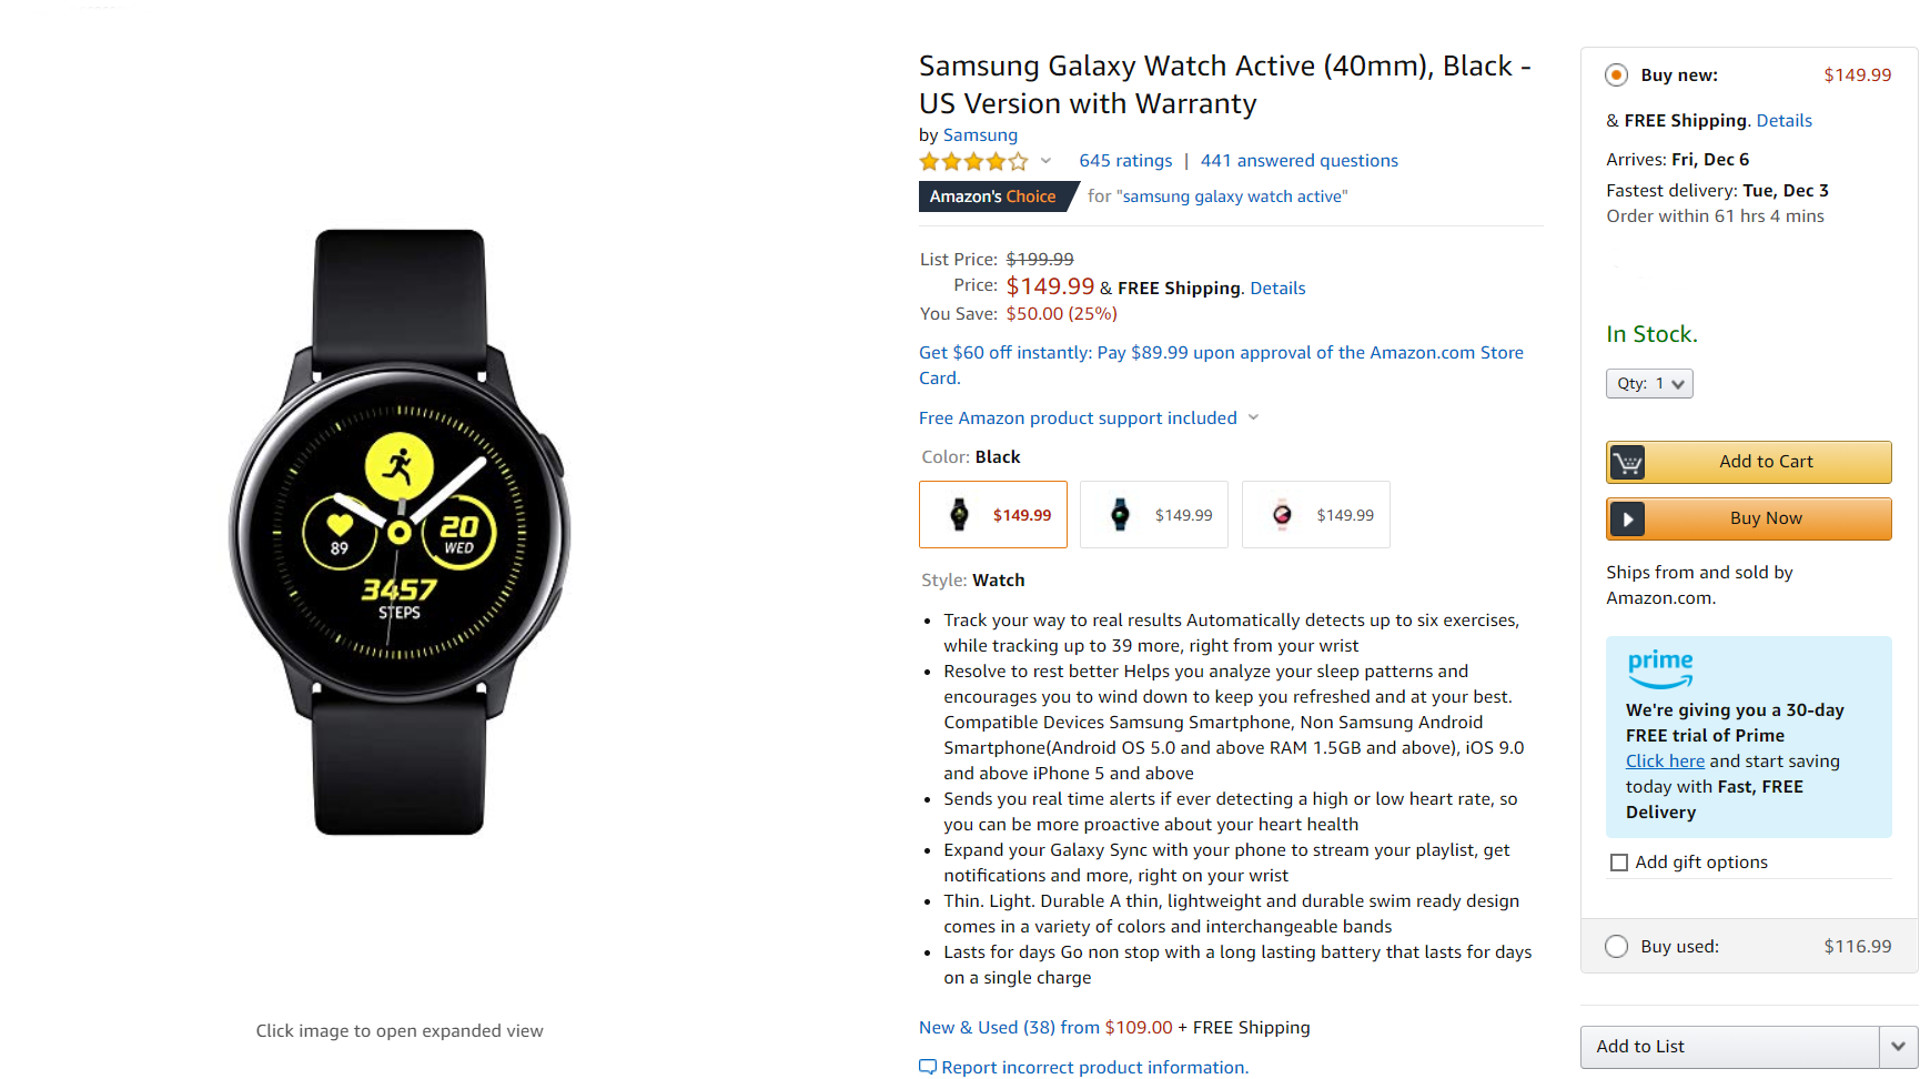 The Samsung Galaxy Watch Active.